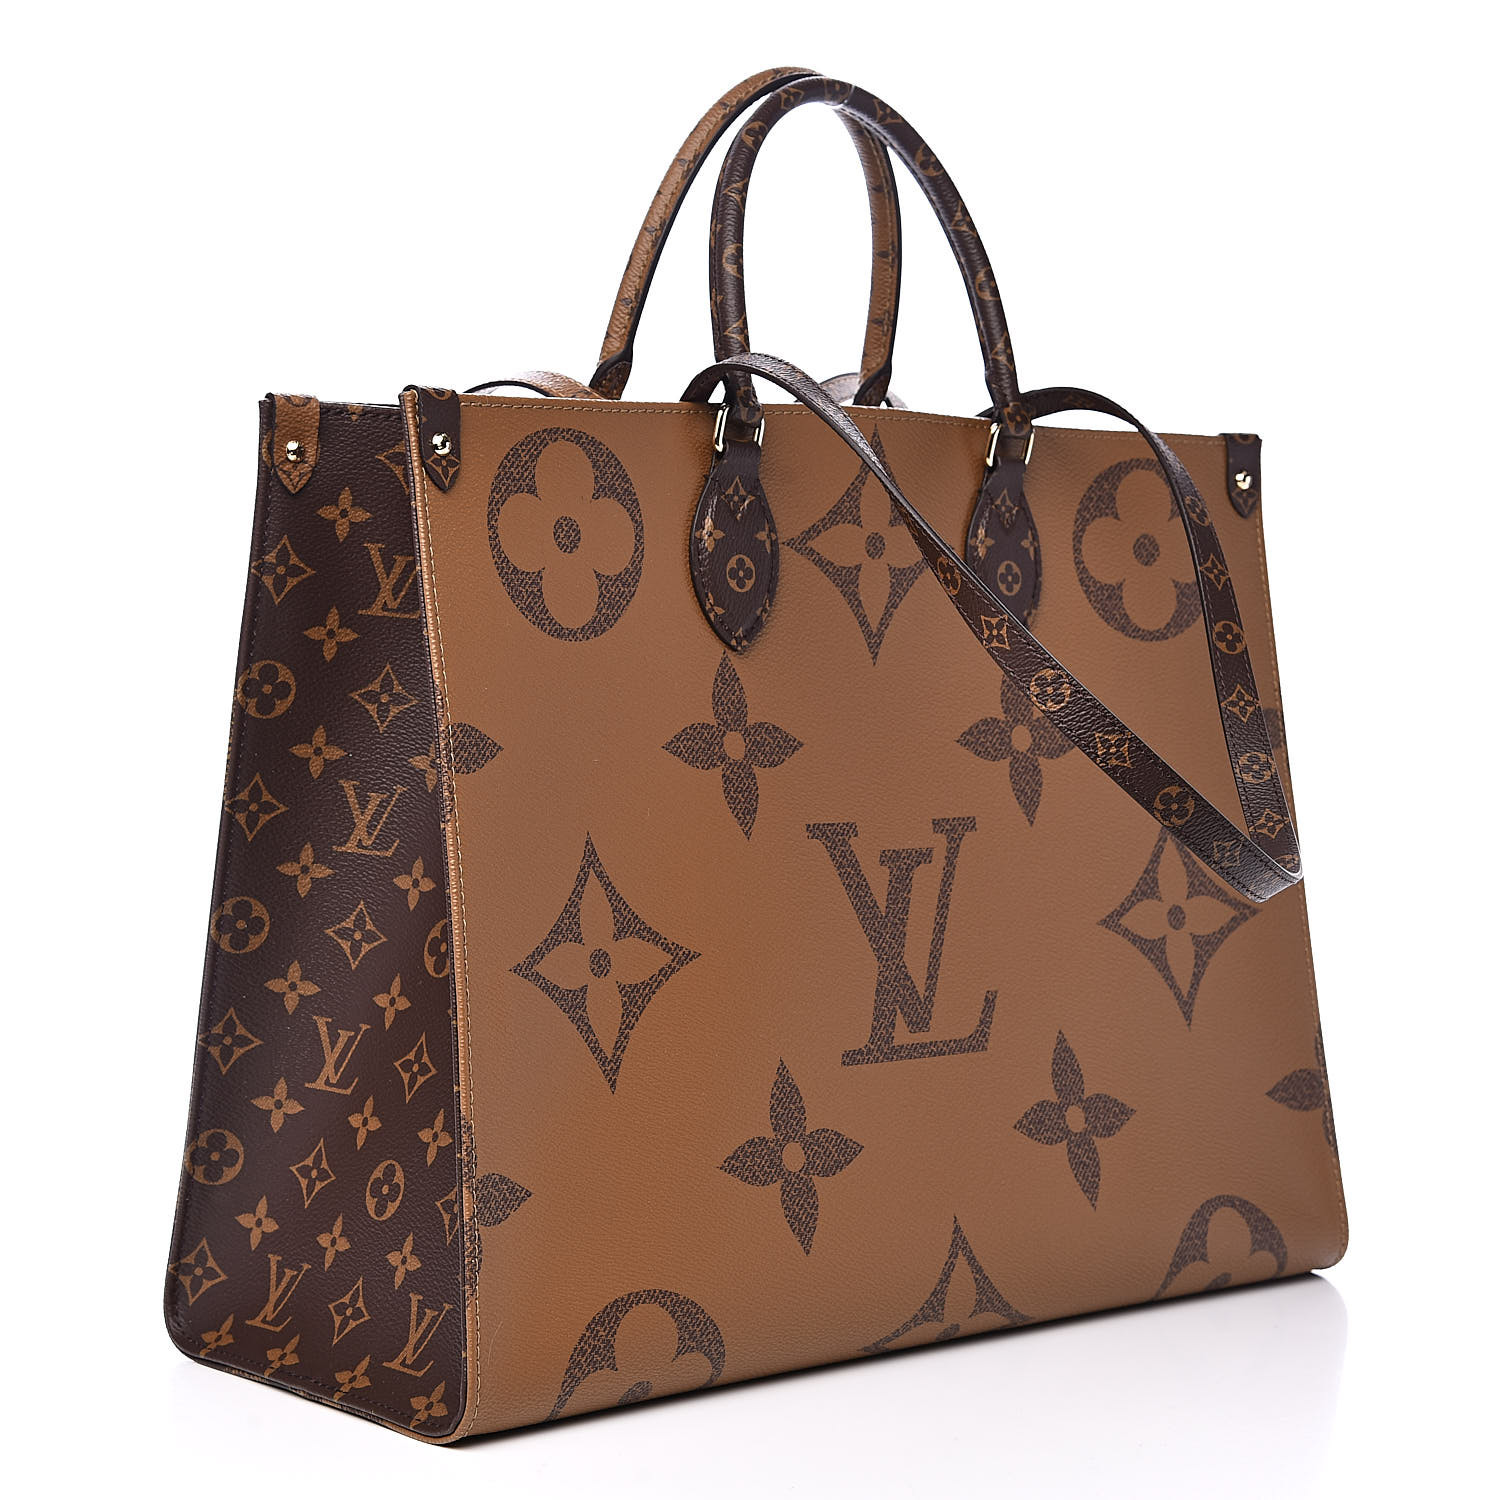 Louis Vuitton OnTheGo tote MM Vs GM Bag Size Comparison